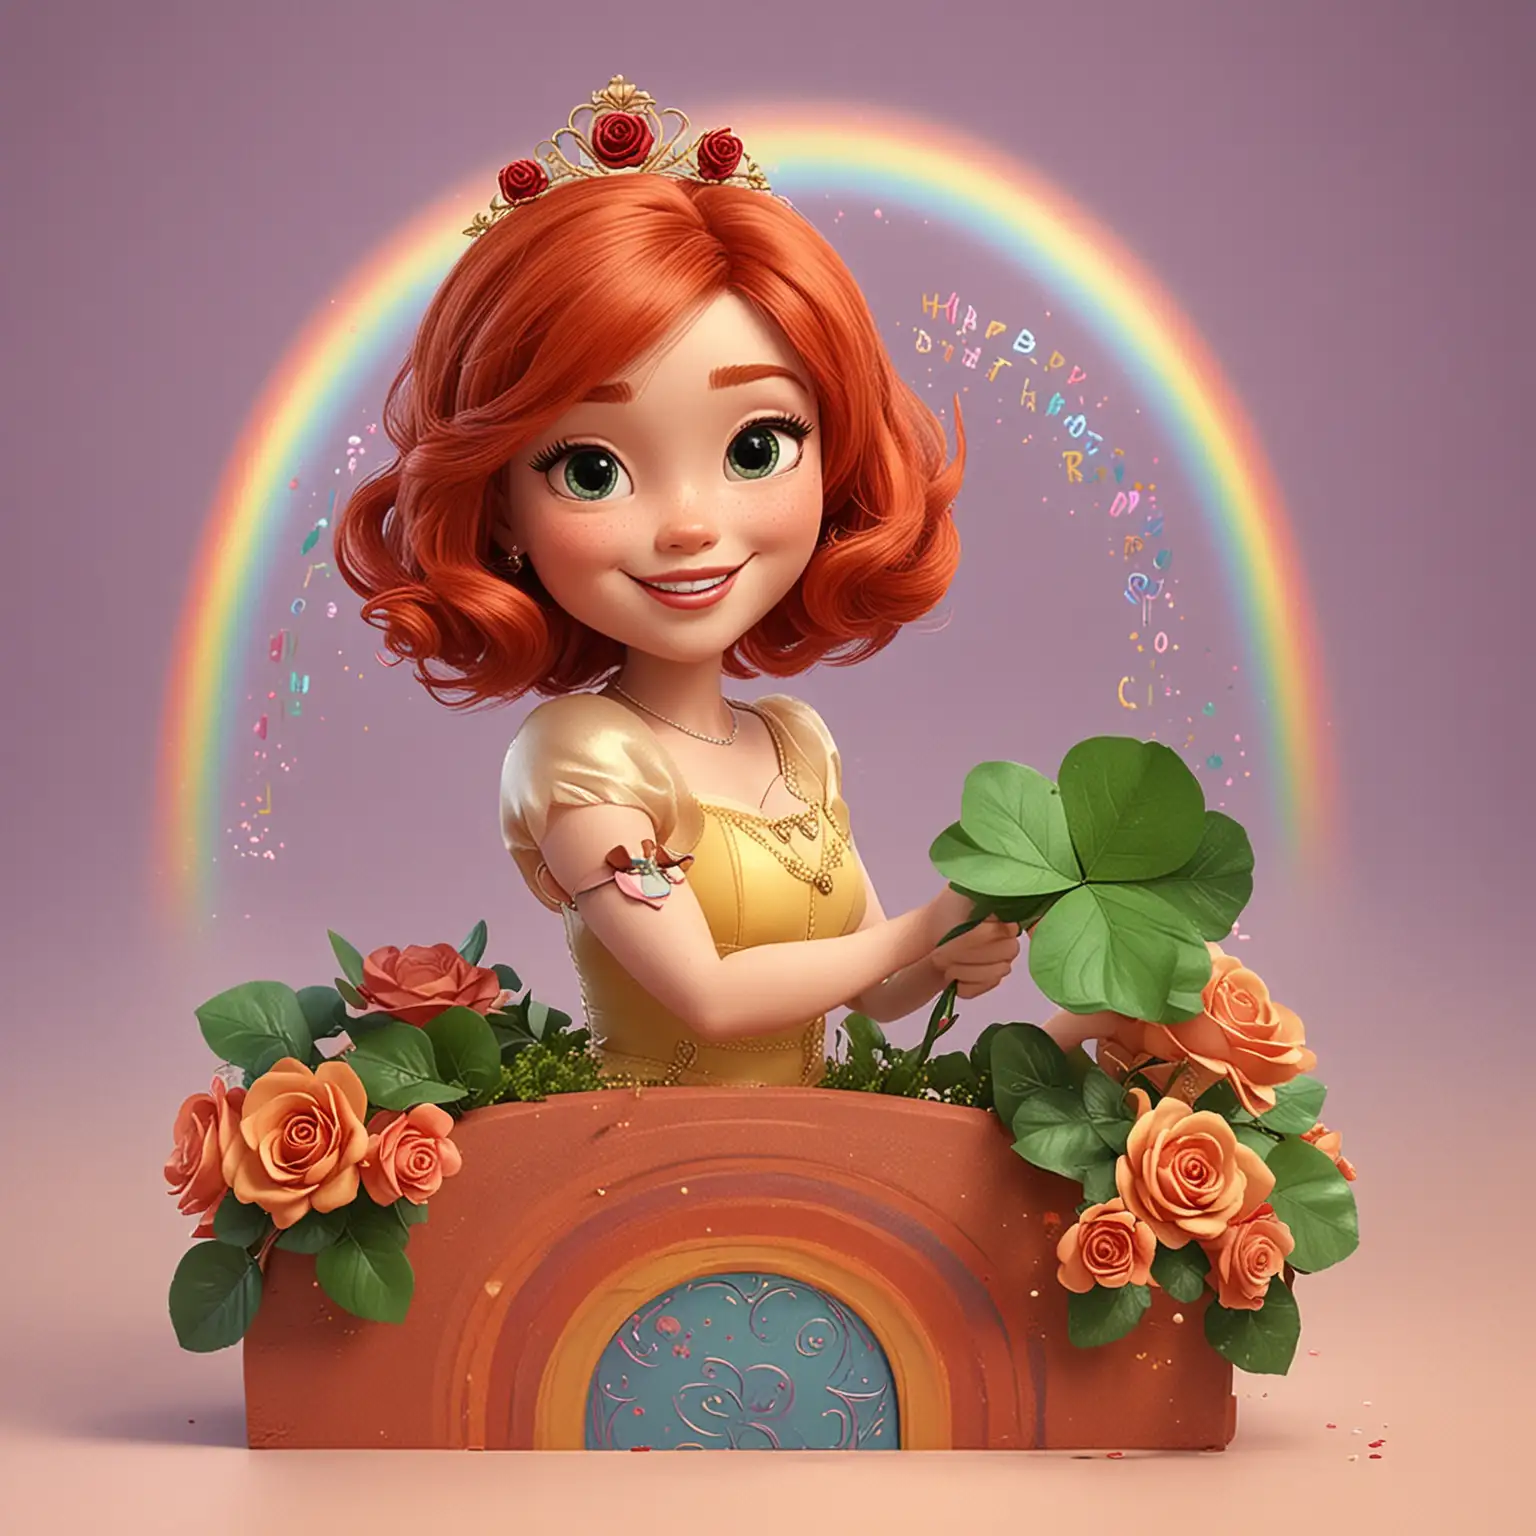 Disney Princess Sliding on a Rainbow with a Rose and 4 Leaf Clover Bush